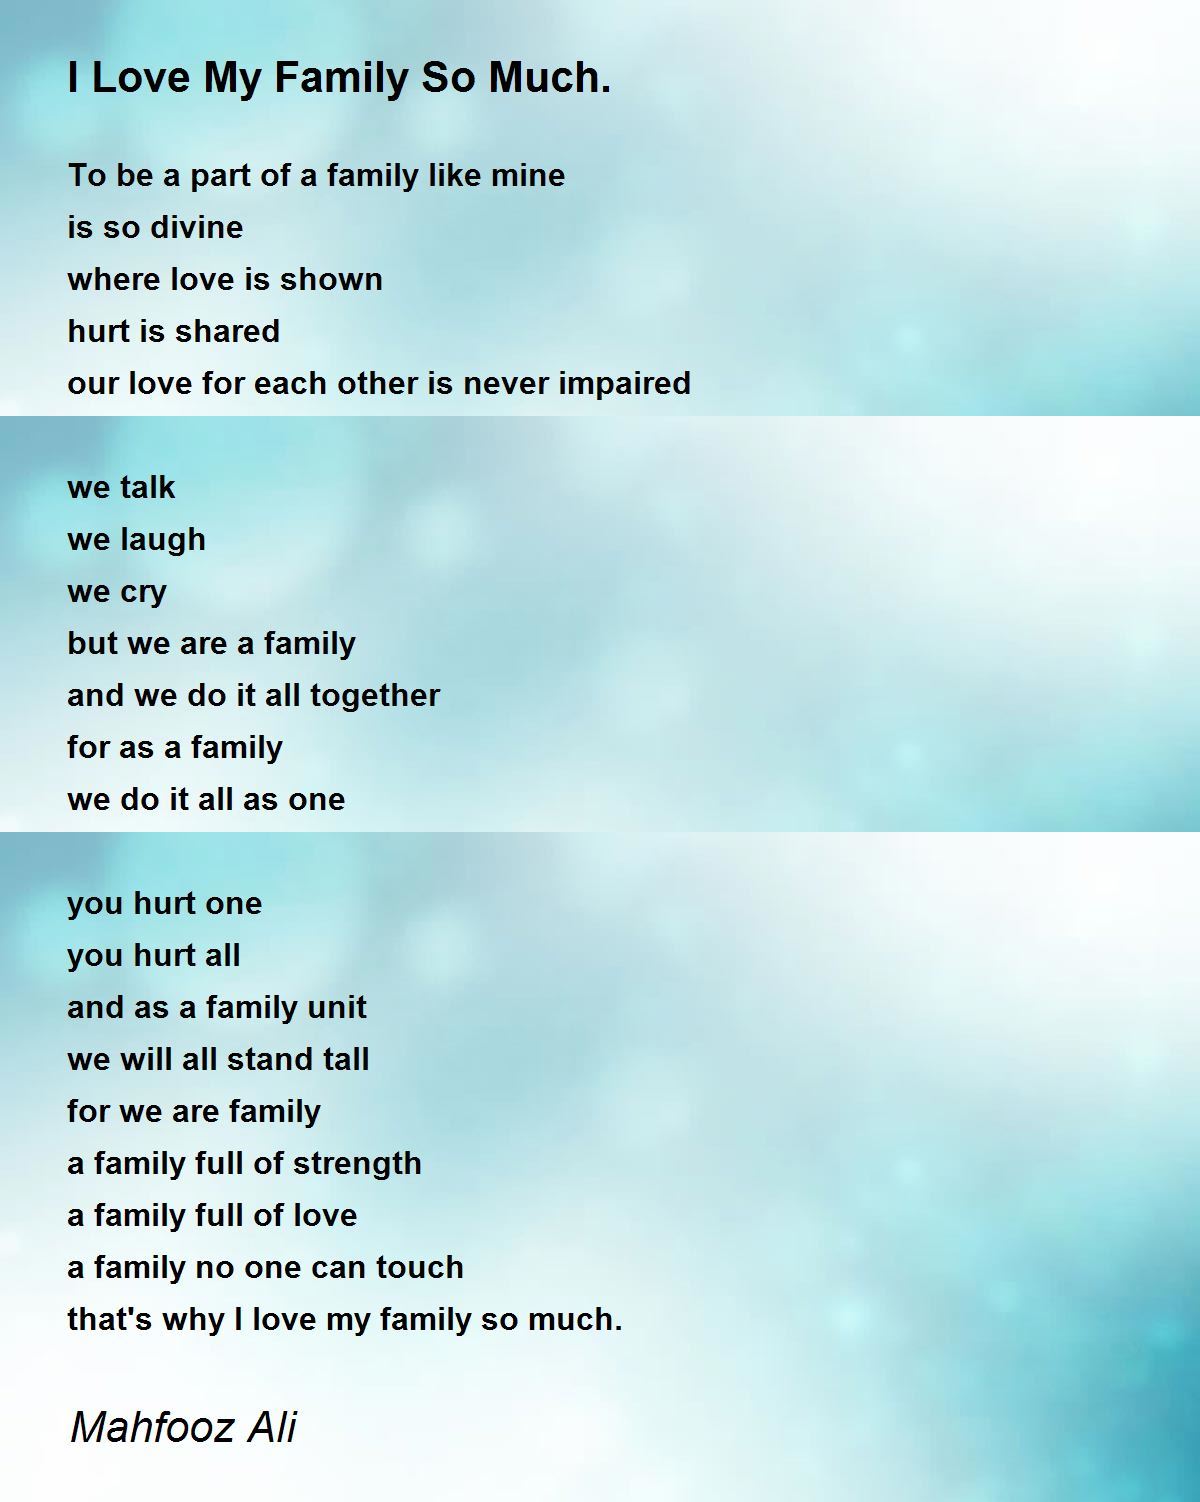 I Love My Family So Much. Poem by Mahfooz Ali - Poem Hunter